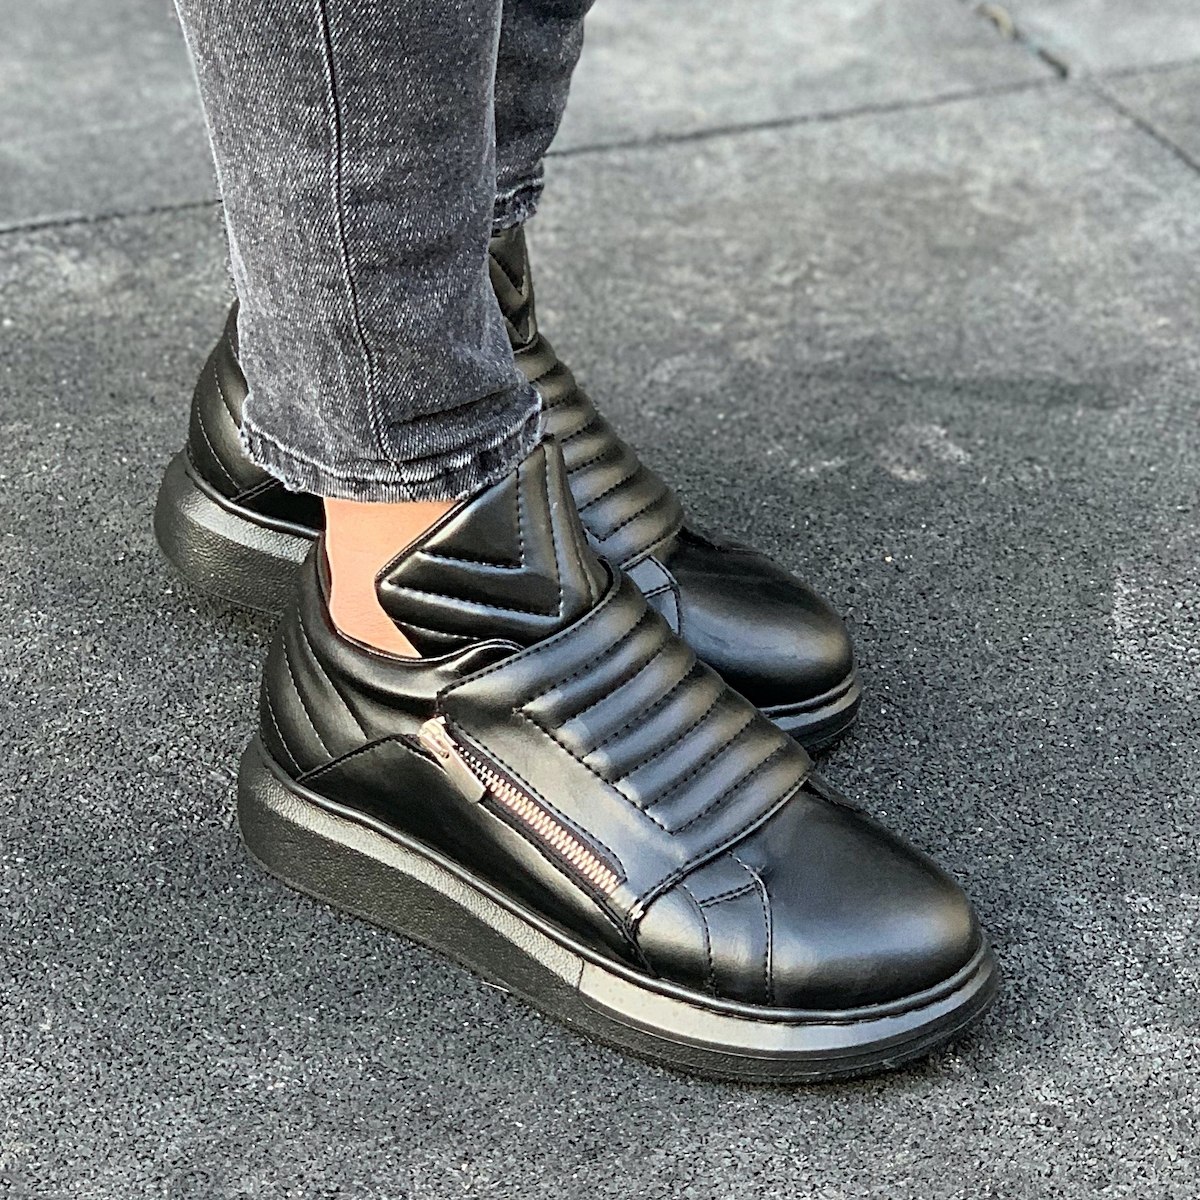 Men's Hype Sole "Black Armor" Sneakers | Martin Valen